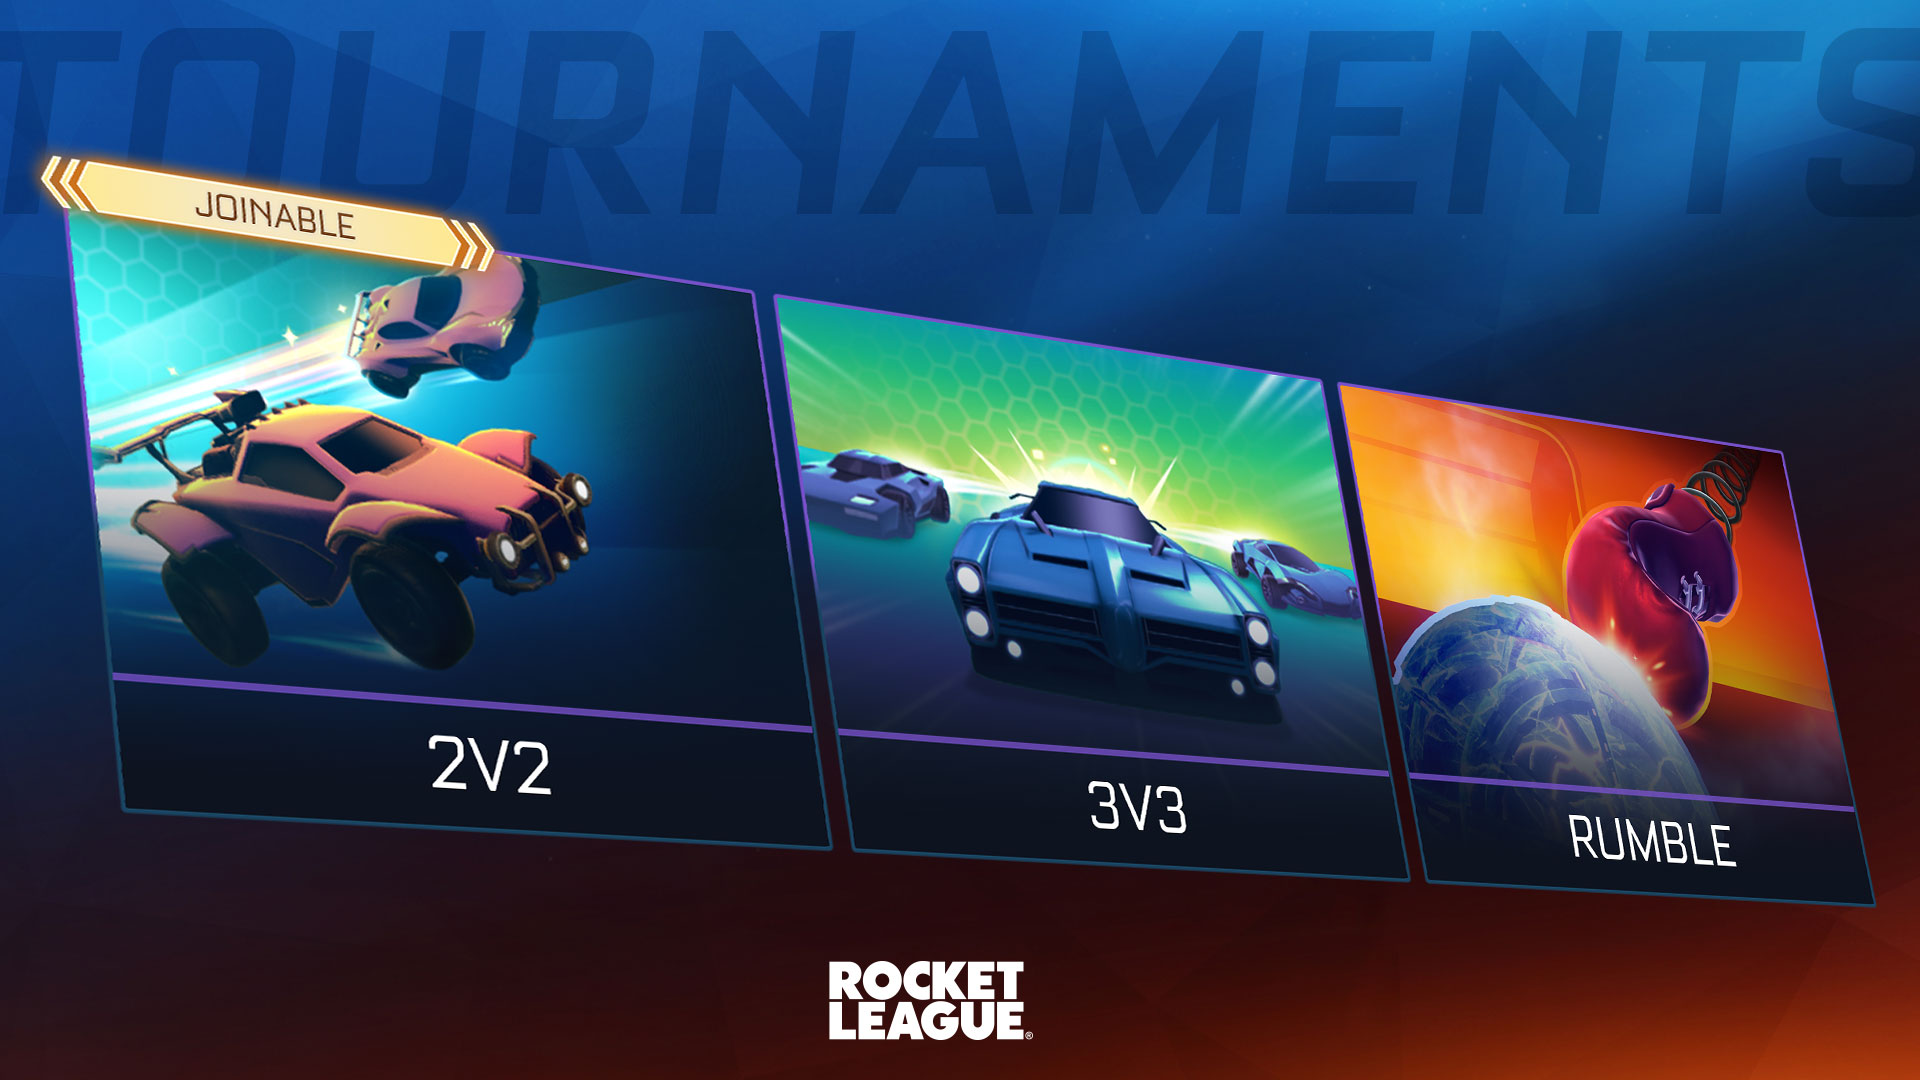 Rocket League is getting 2v2 tournaments in Season 4